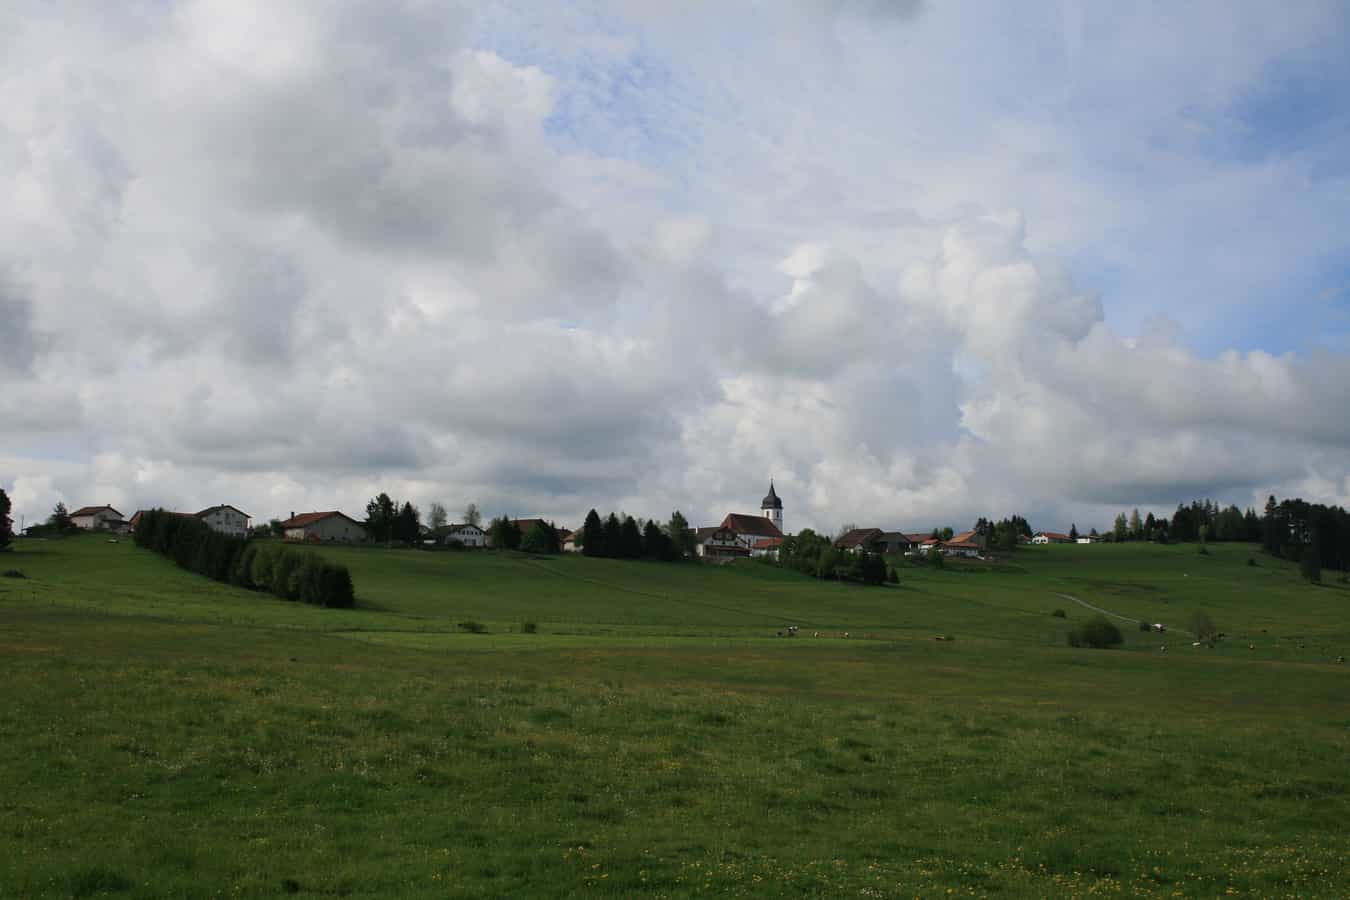 The village of Montfaucon JU, Switzerland